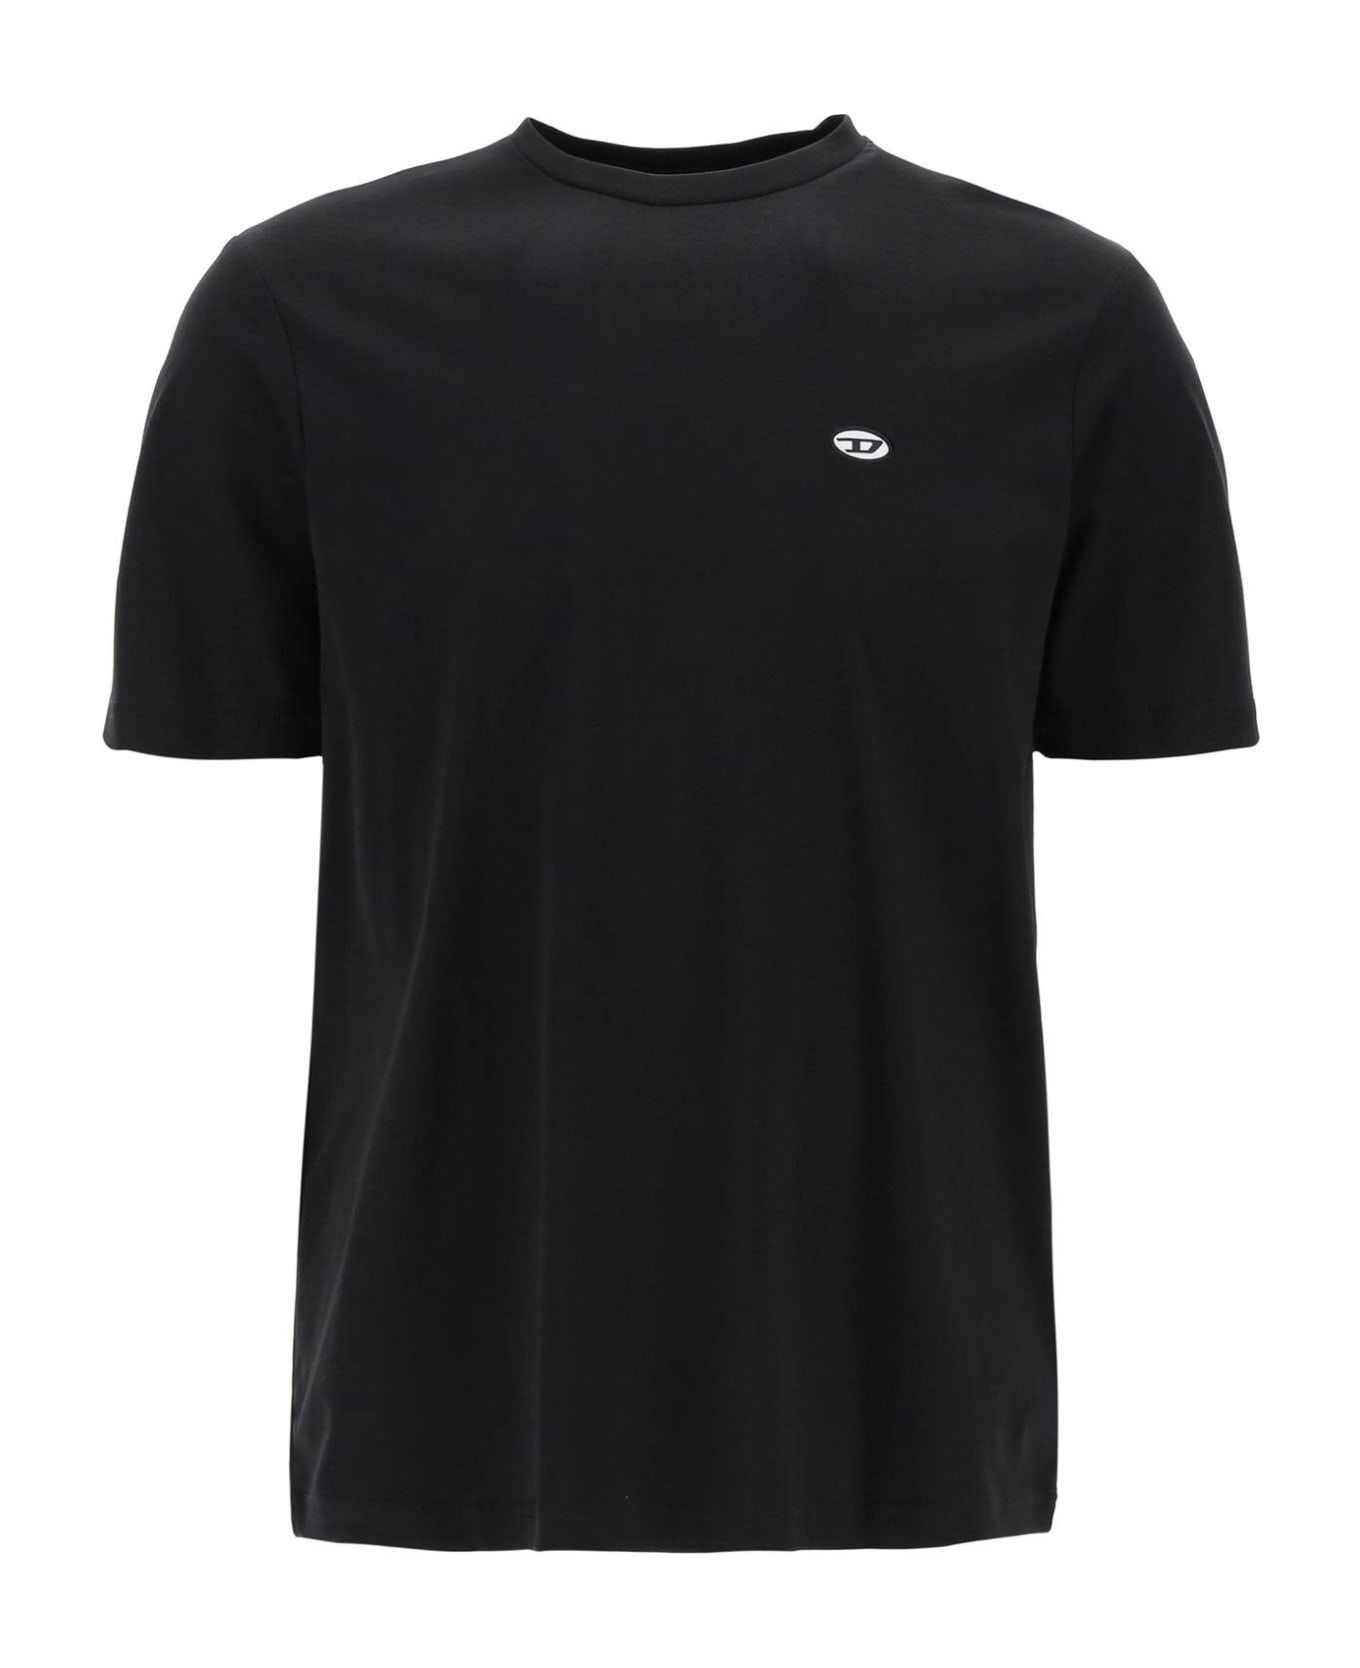 Diesel T-just-doval-pj Crewneck T-shirt - DEEP BLACK (Black)